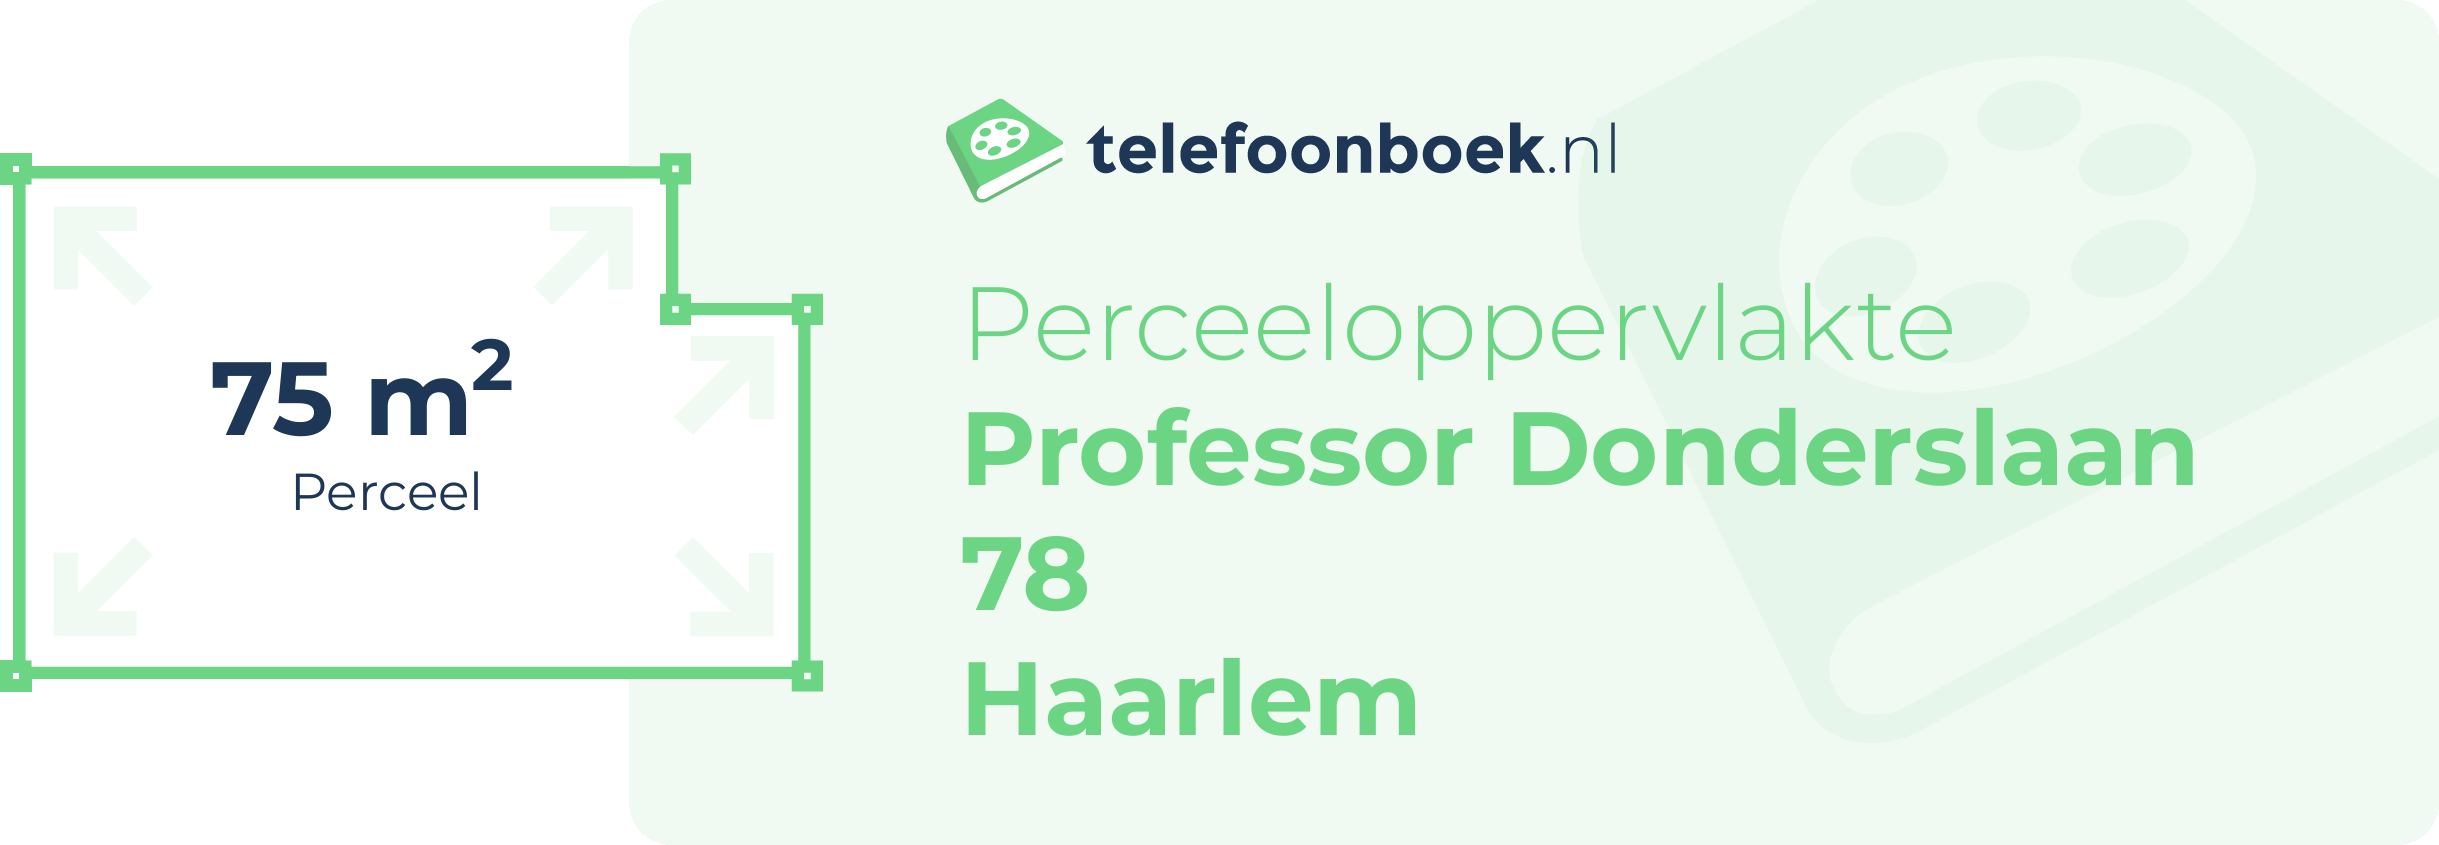 Perceeloppervlakte Professor Donderslaan 78 Haarlem